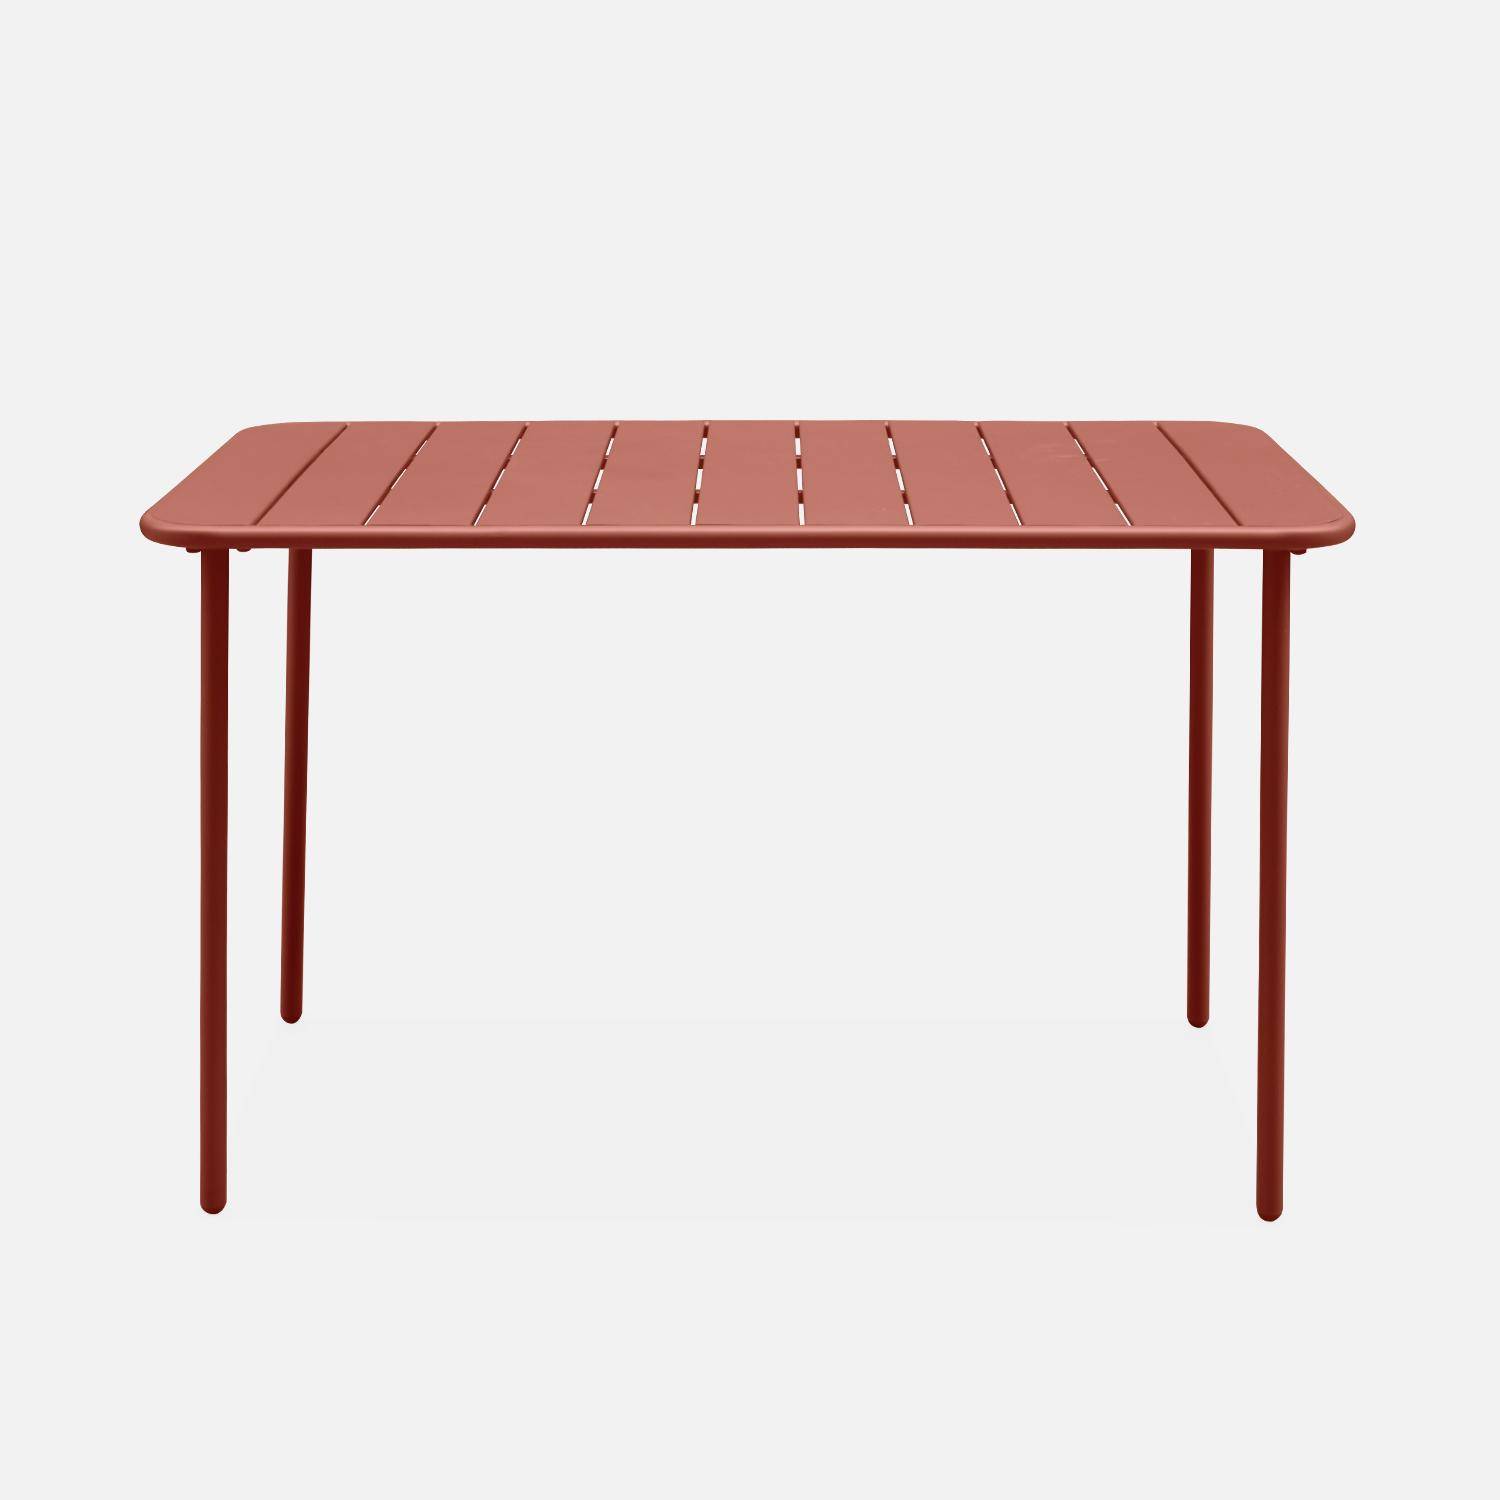 4-seater rectangular steel garden table, 120x70cm - Amelia - Terracotta,sweeek,Photo5